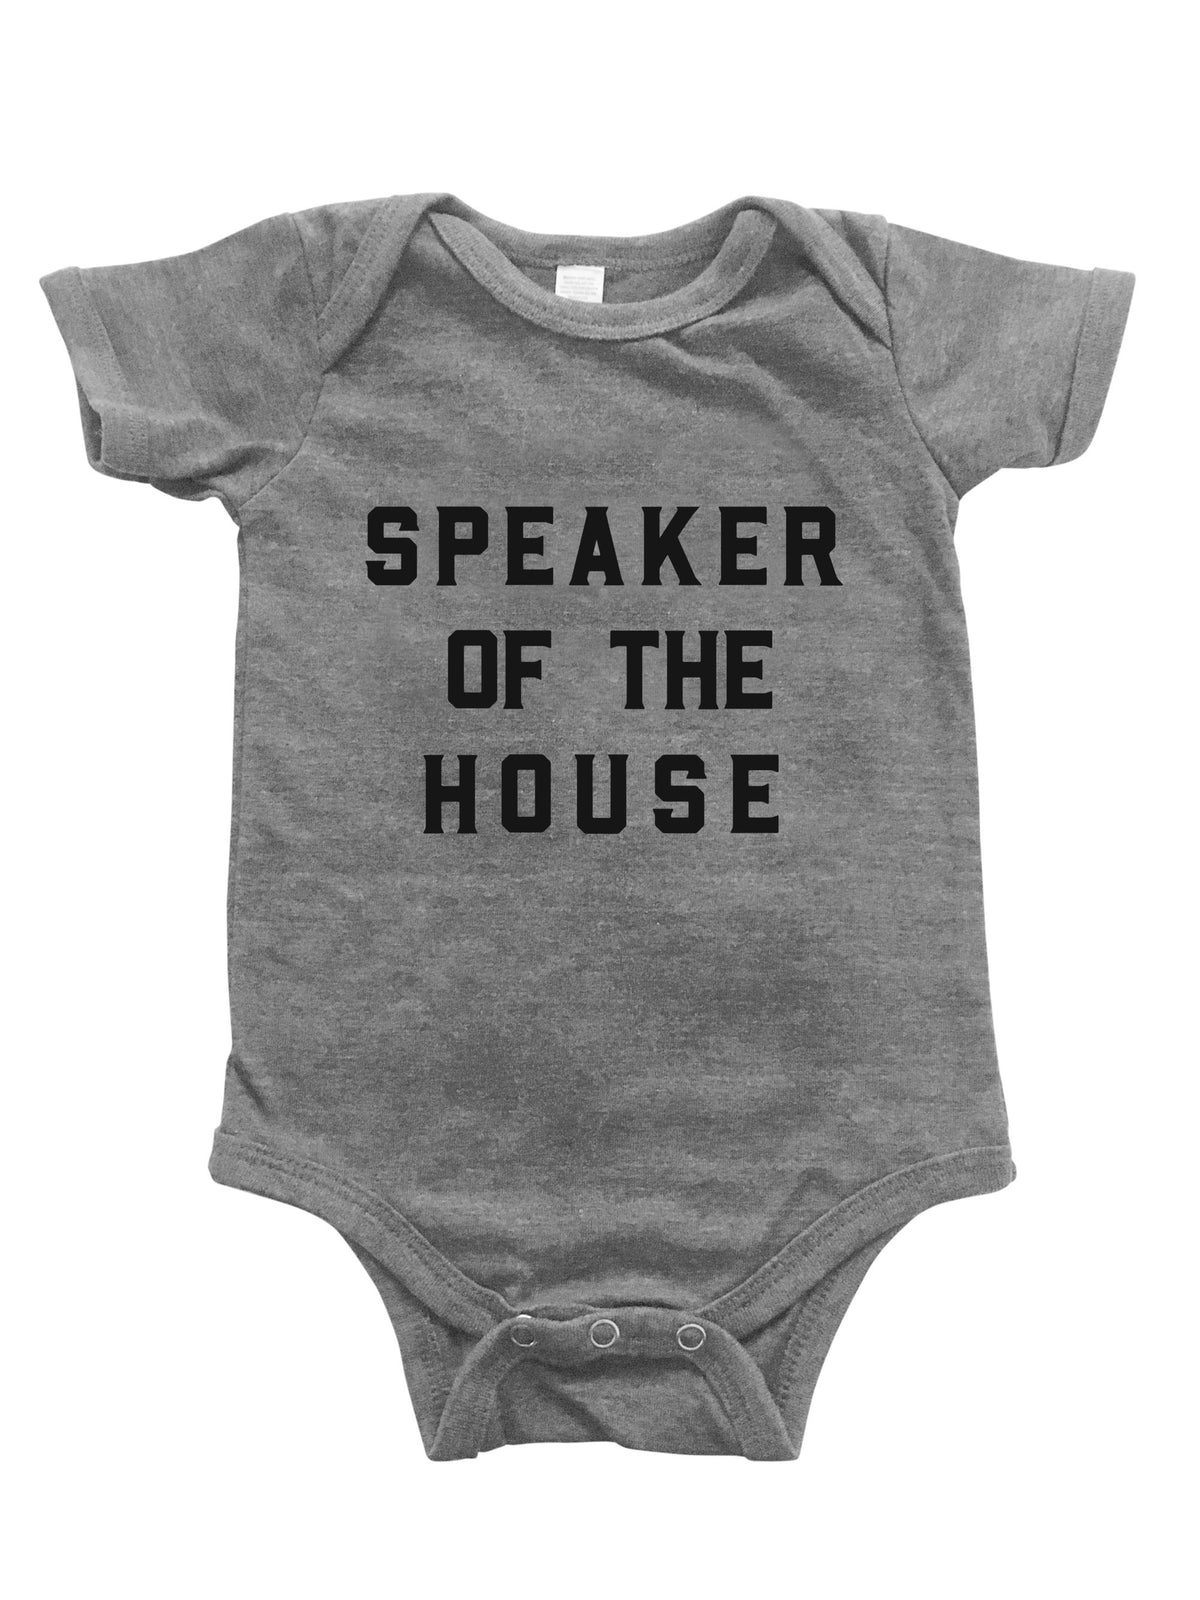 Speaker of the House Onesie